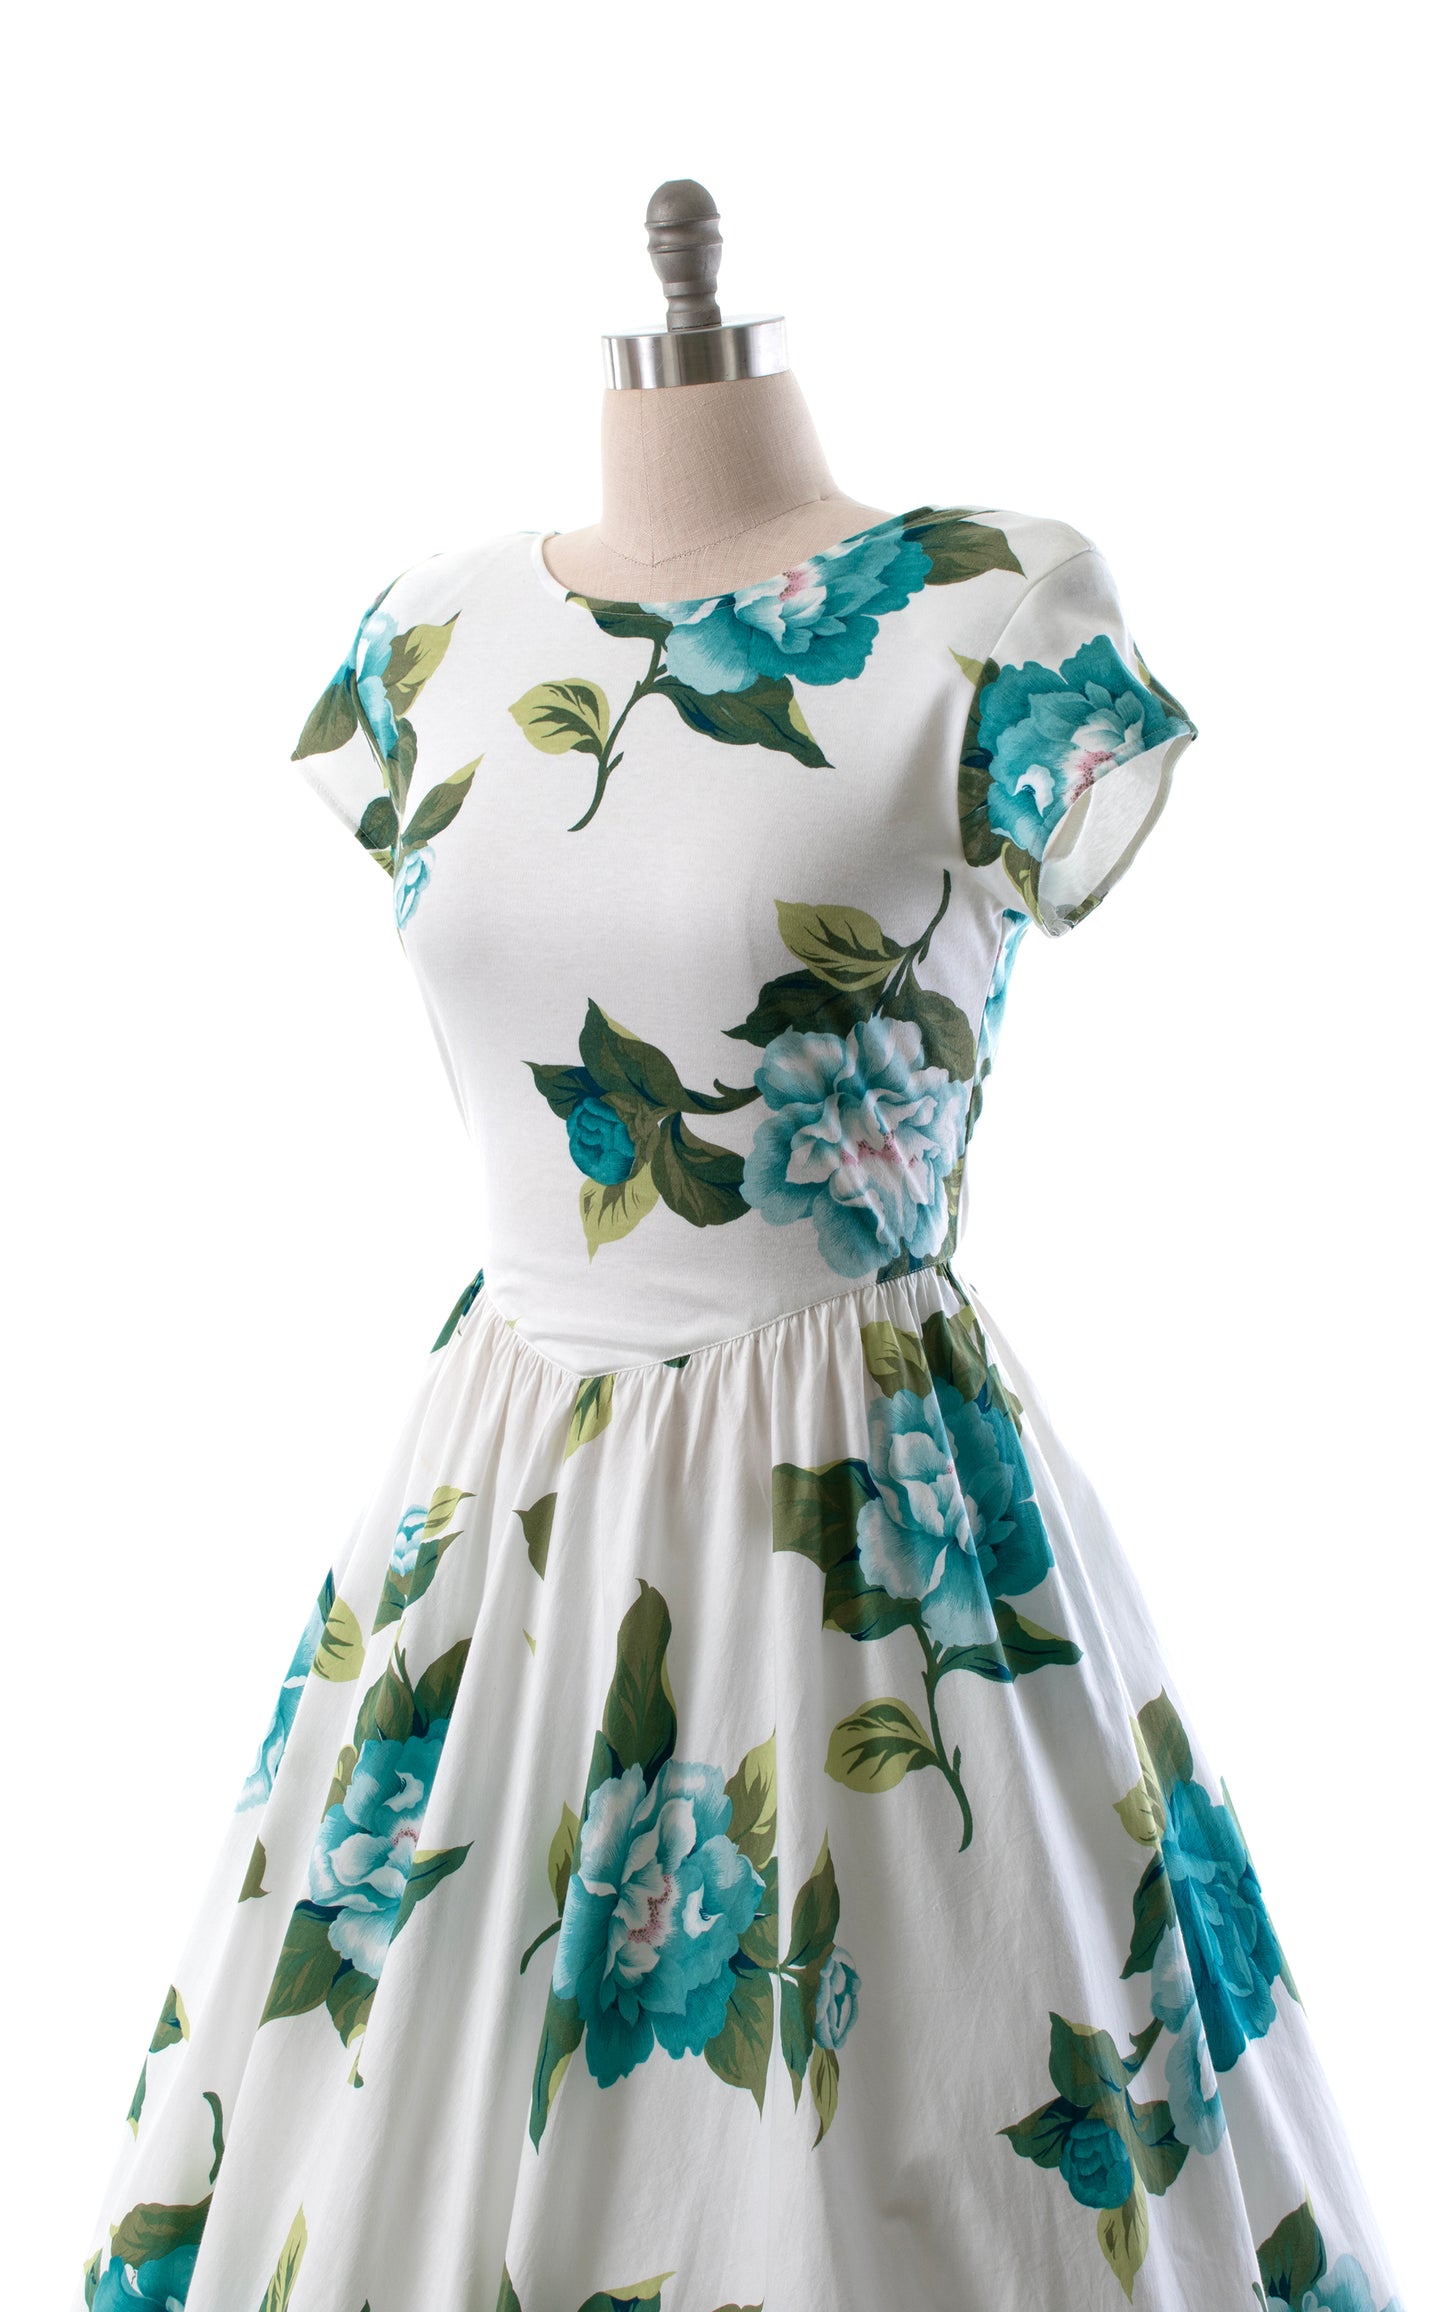 NEW ARRIVAL || 1980s CAROL ANDERSON Floral Dress | medium/large